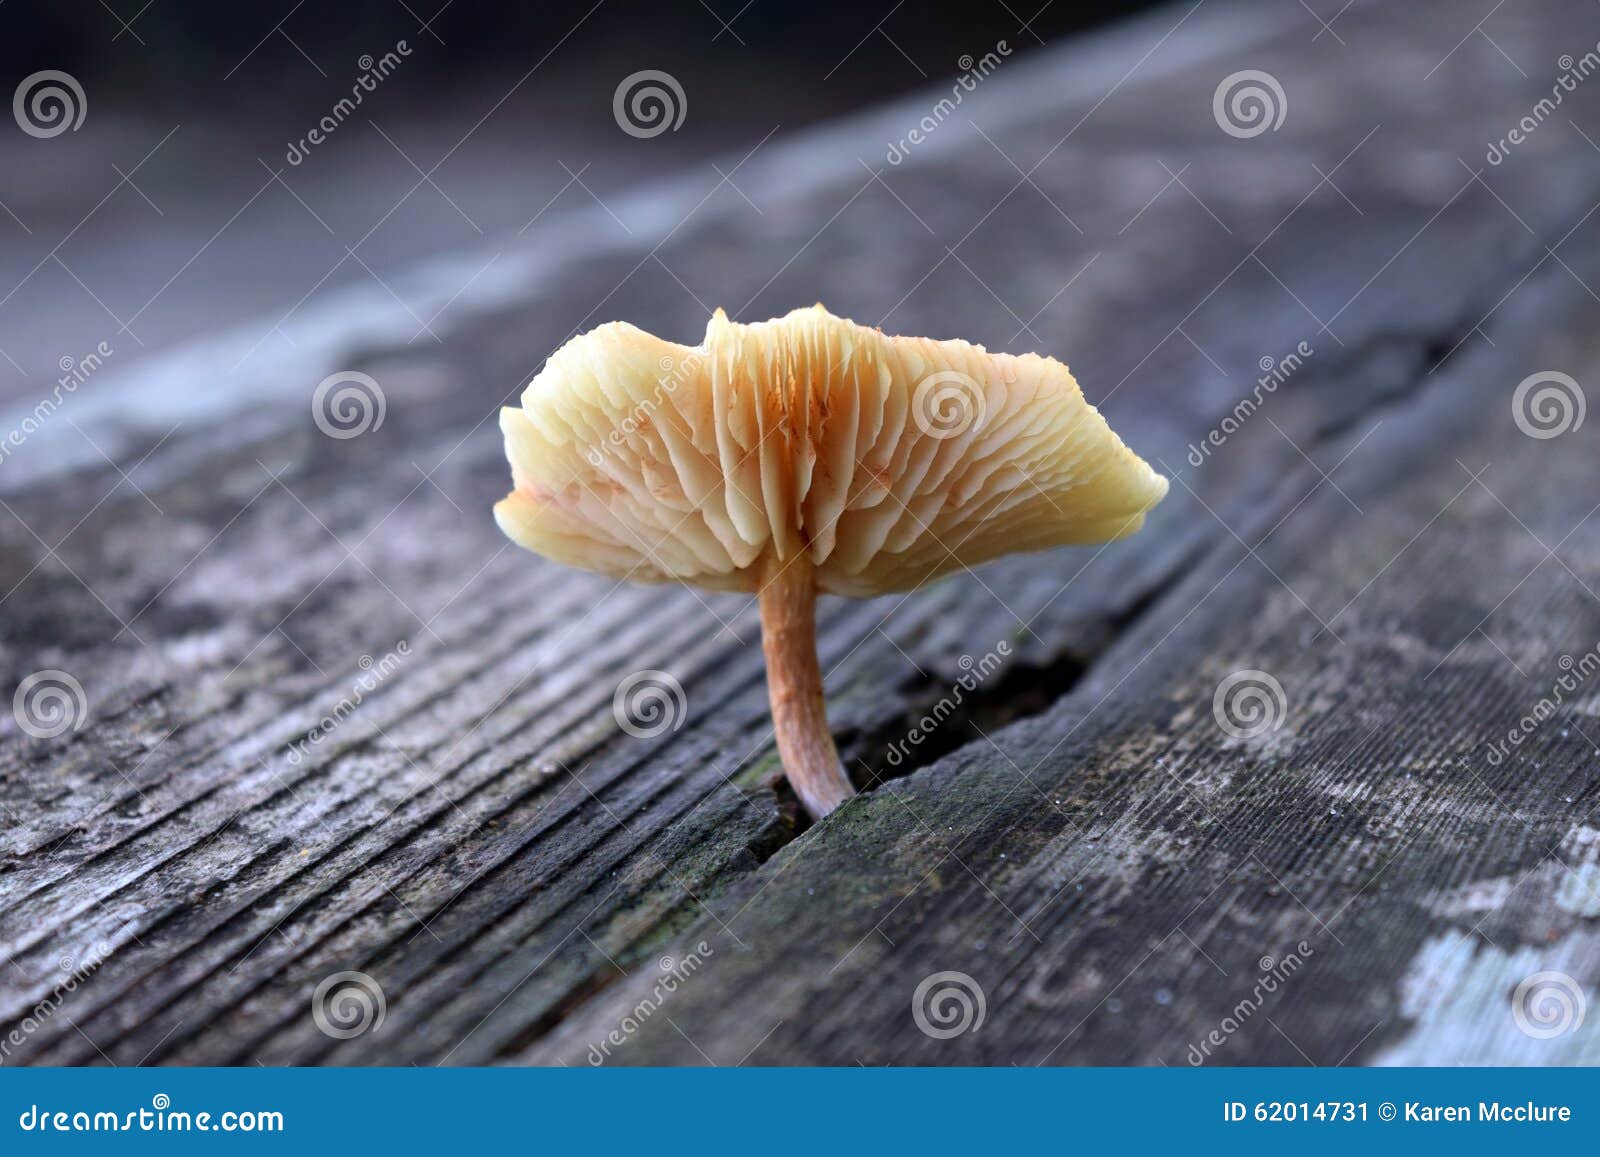 Wild Mushroom Stock Photo - Image: 62014731